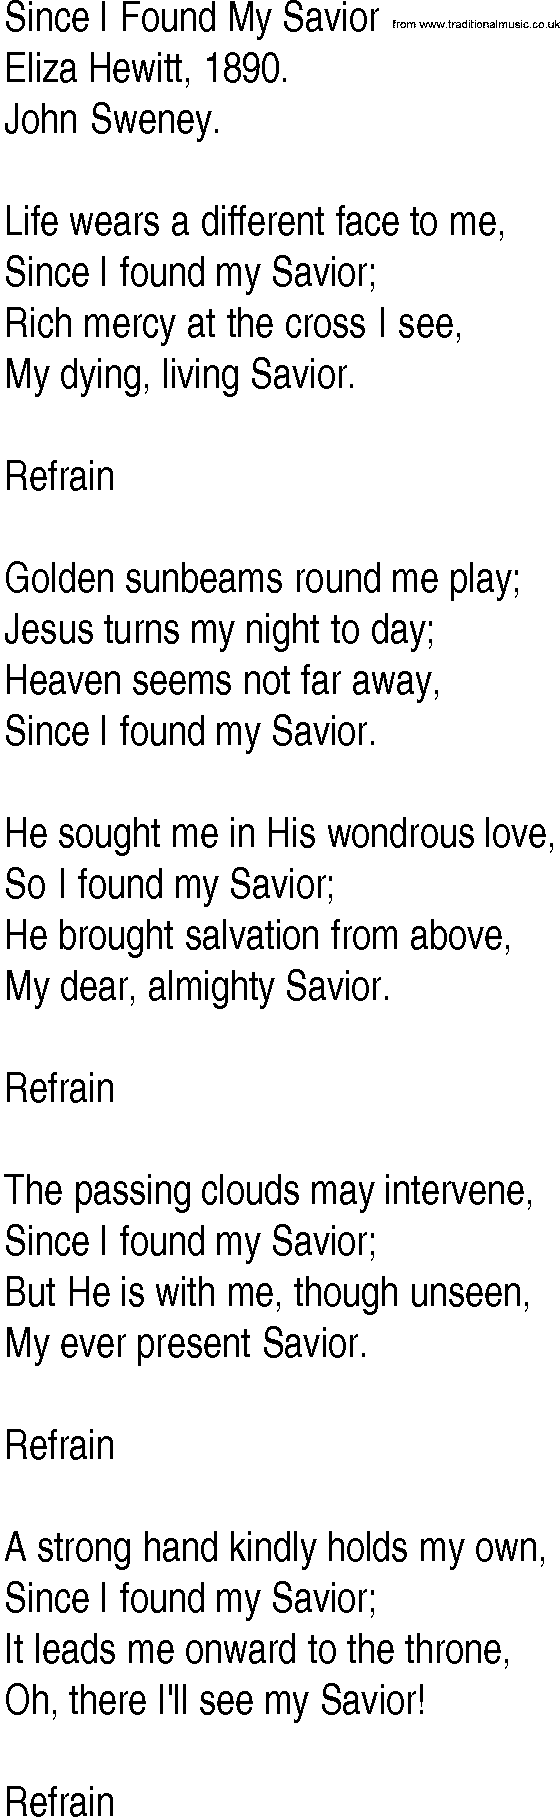 Hymn and Gospel Song: Since I Found My Savior by Eliza Hewitt lyrics